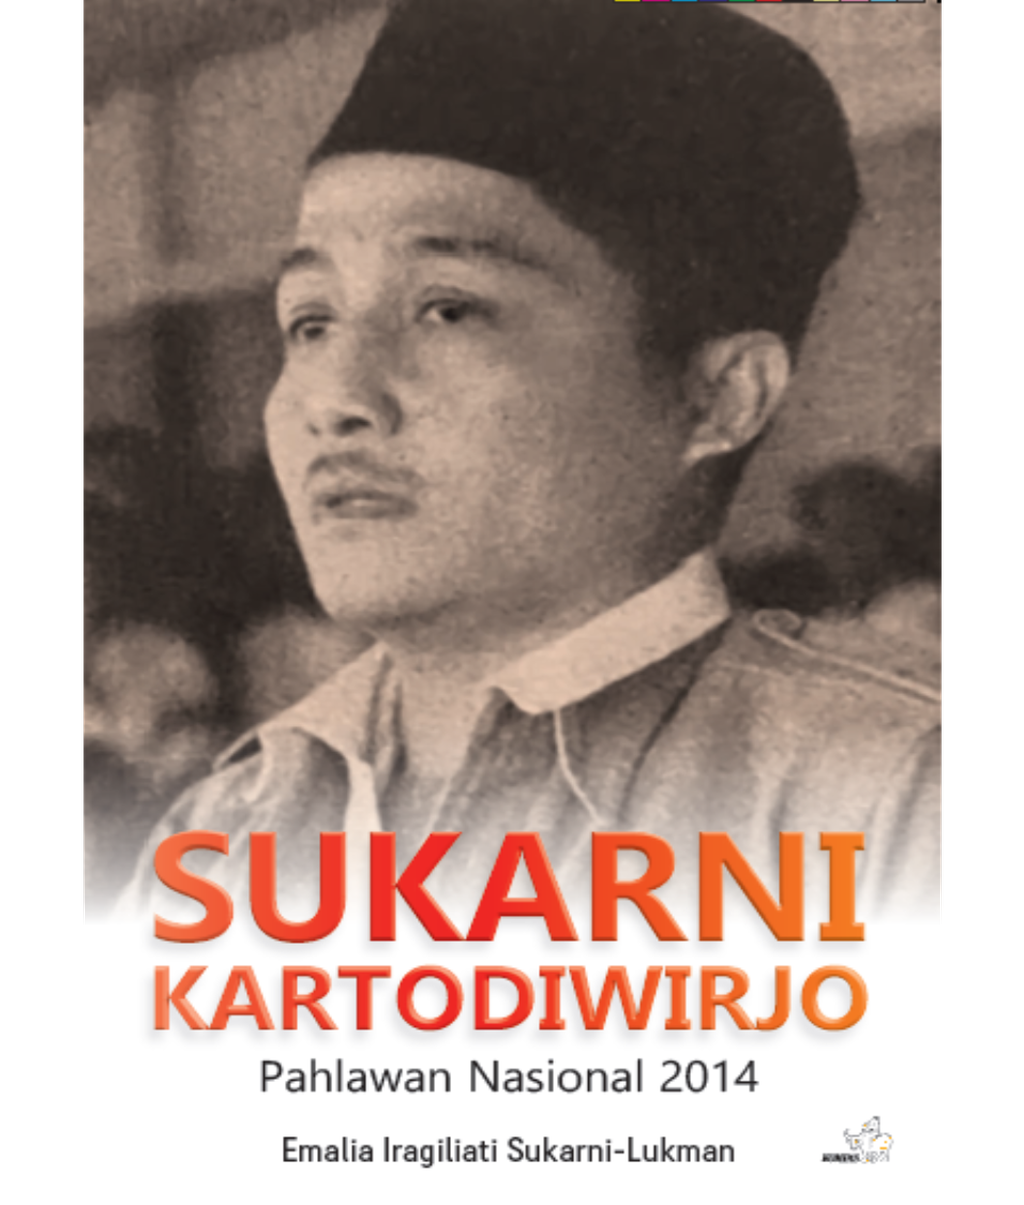 Buku yang mengulas tentang kiprah Sukarni Kartodiwirjo yang dikenal sebagai salah satu  pemuda yang menjadi  tokoh utama pada peristiwa Rengasdengklok, 16 Agustus 1945. Buku itu ditulis oleh anak bungsu Sukarni.